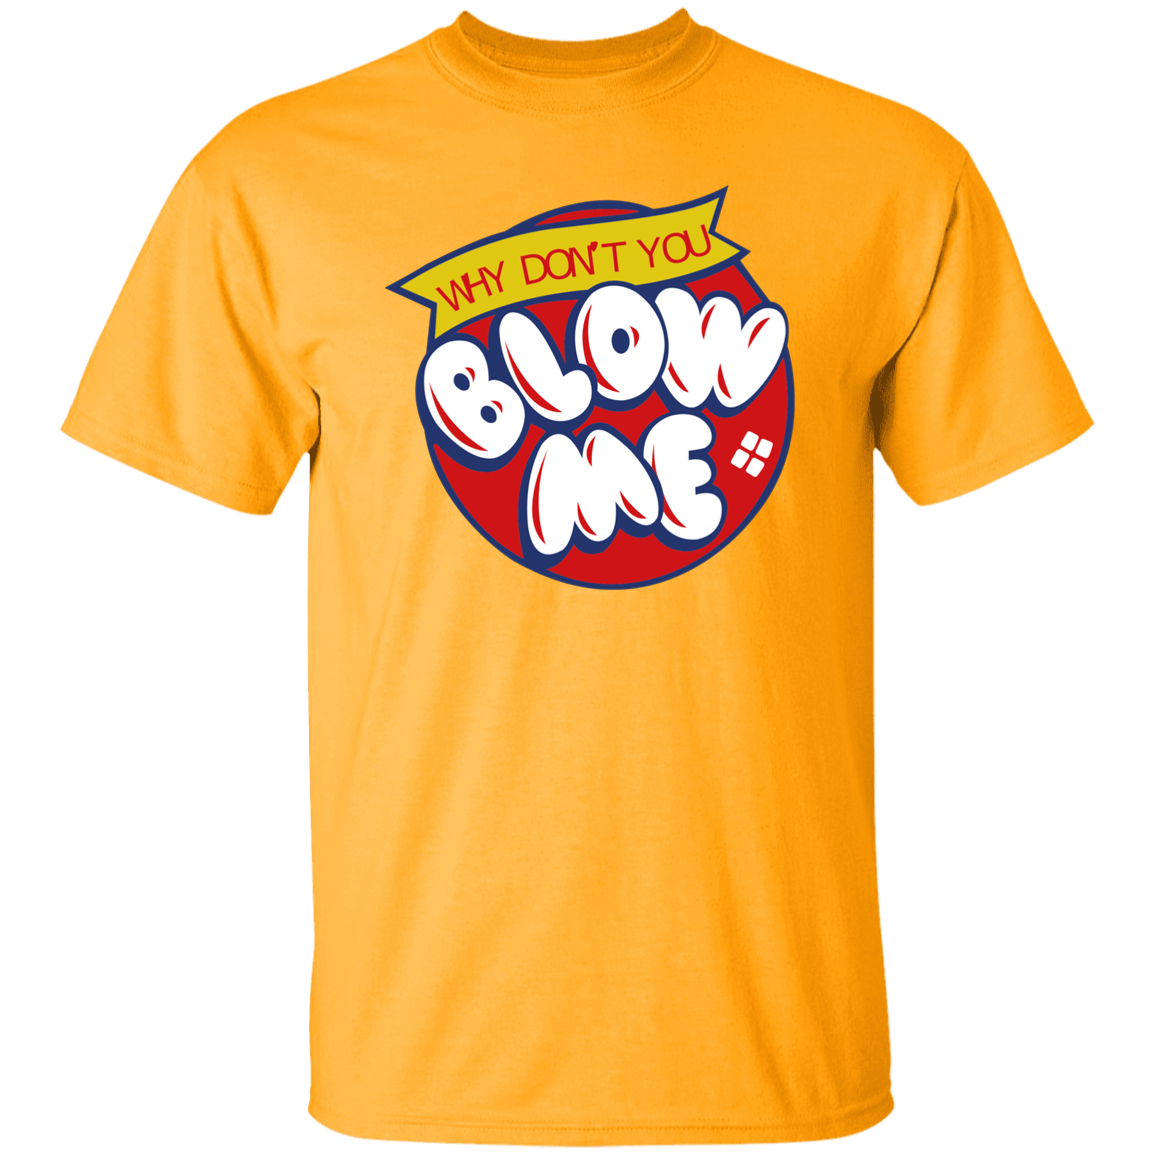 Blow Me -  T-Shirt